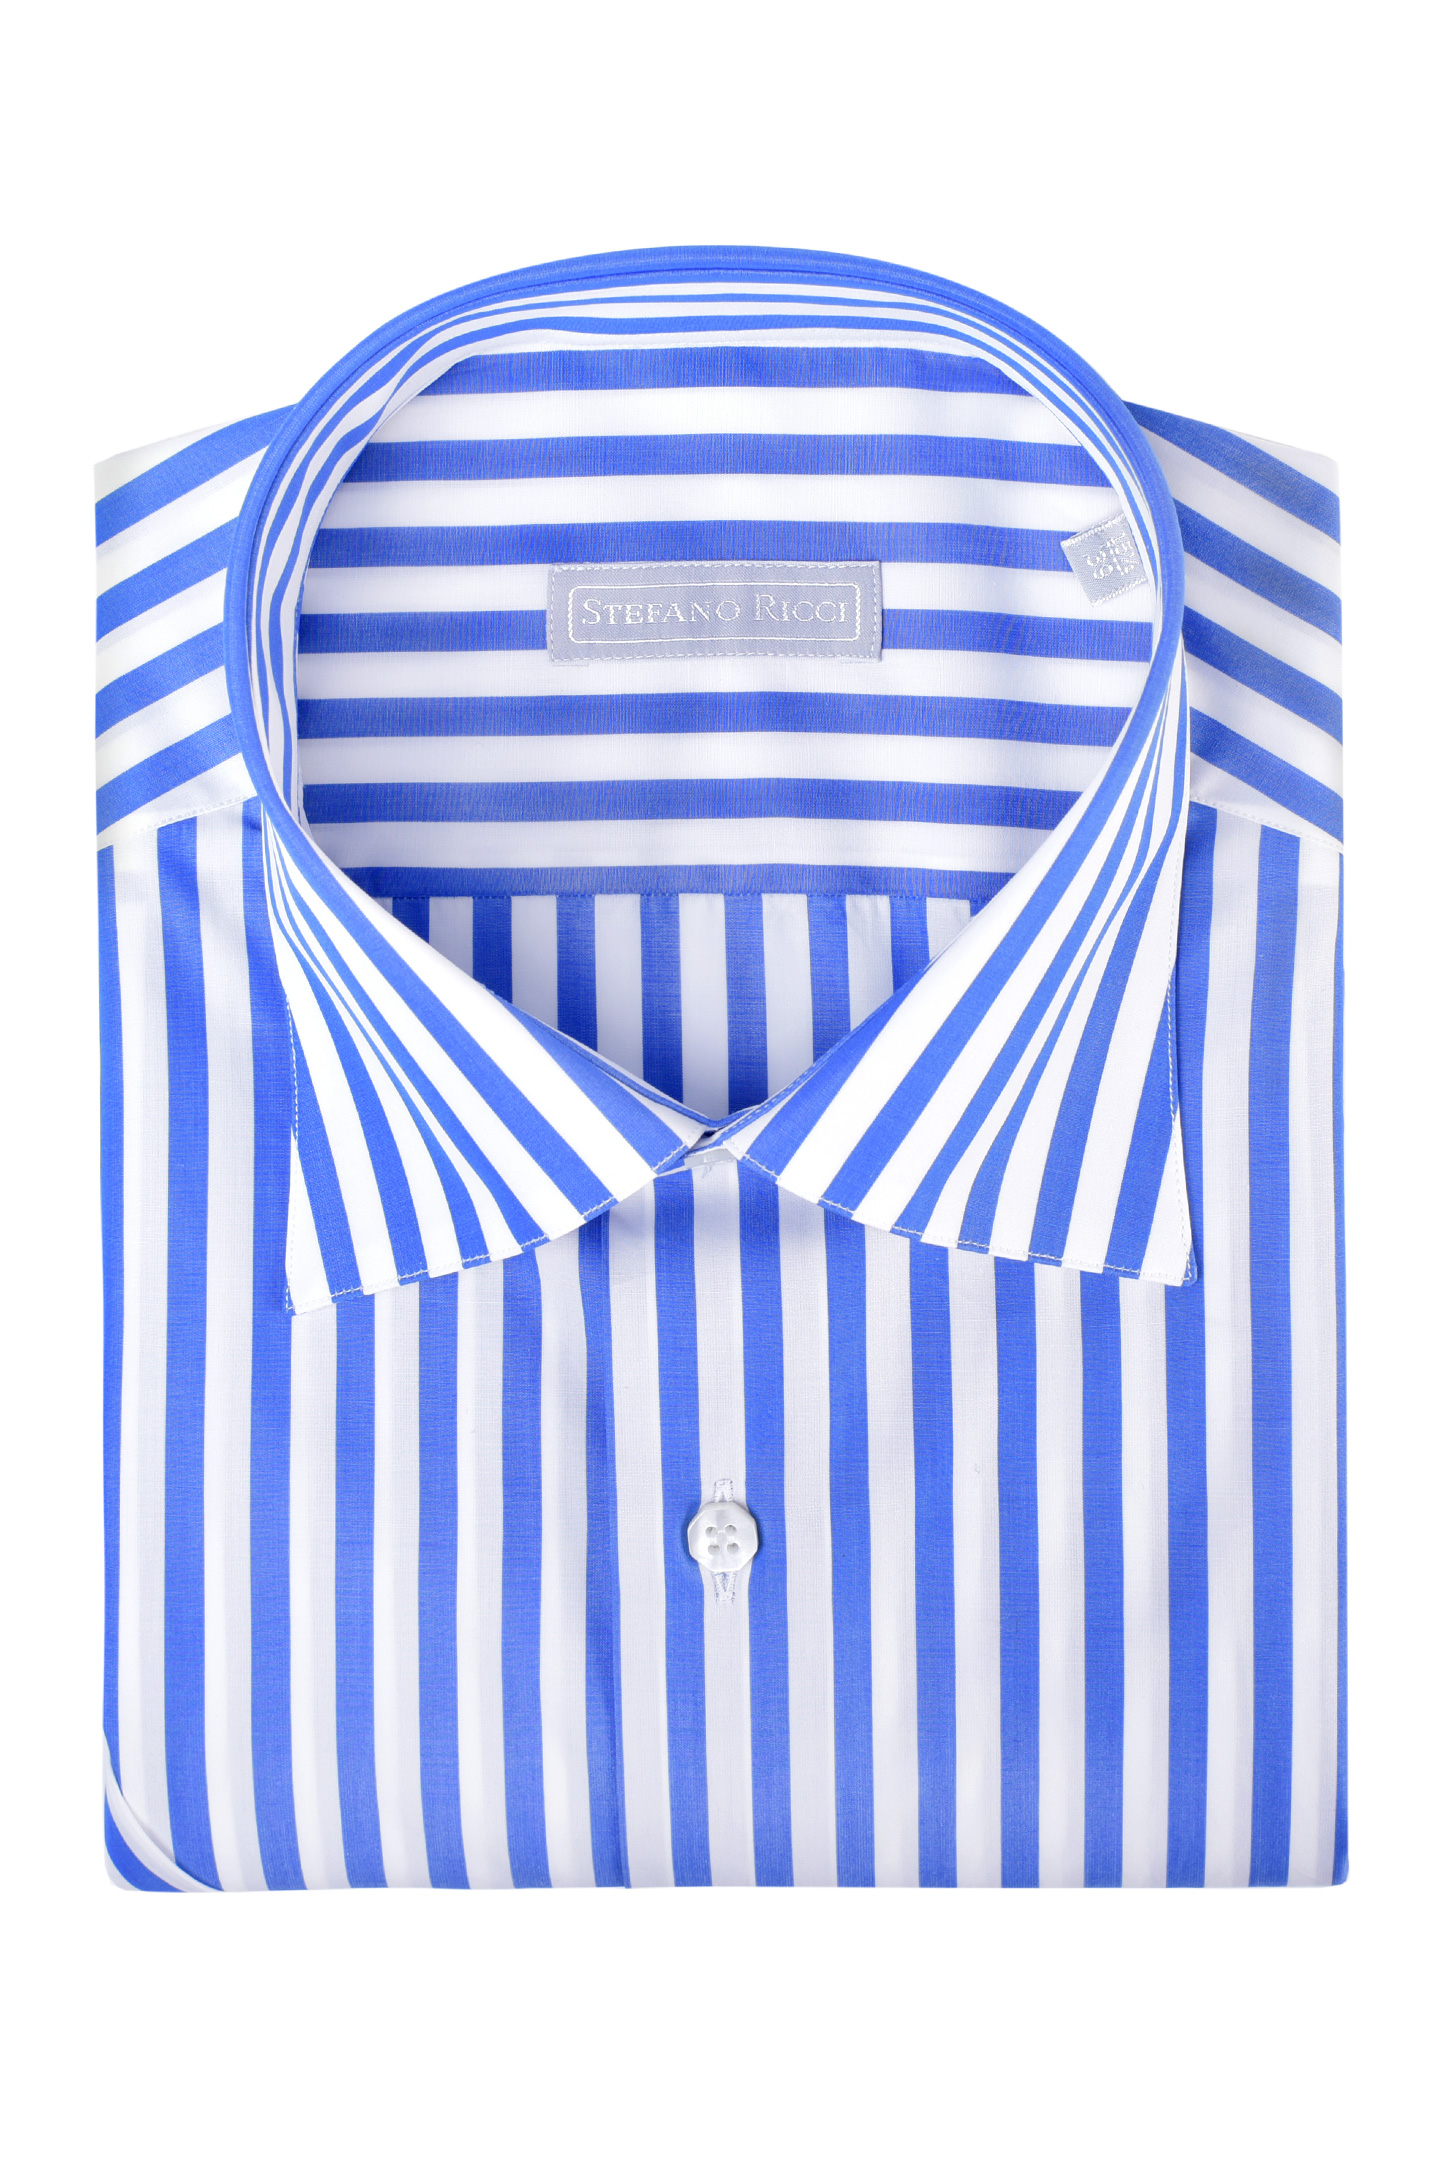 Рубашка STEFANO RICCI MC006030 L2106, цвет: Синий, Мужской